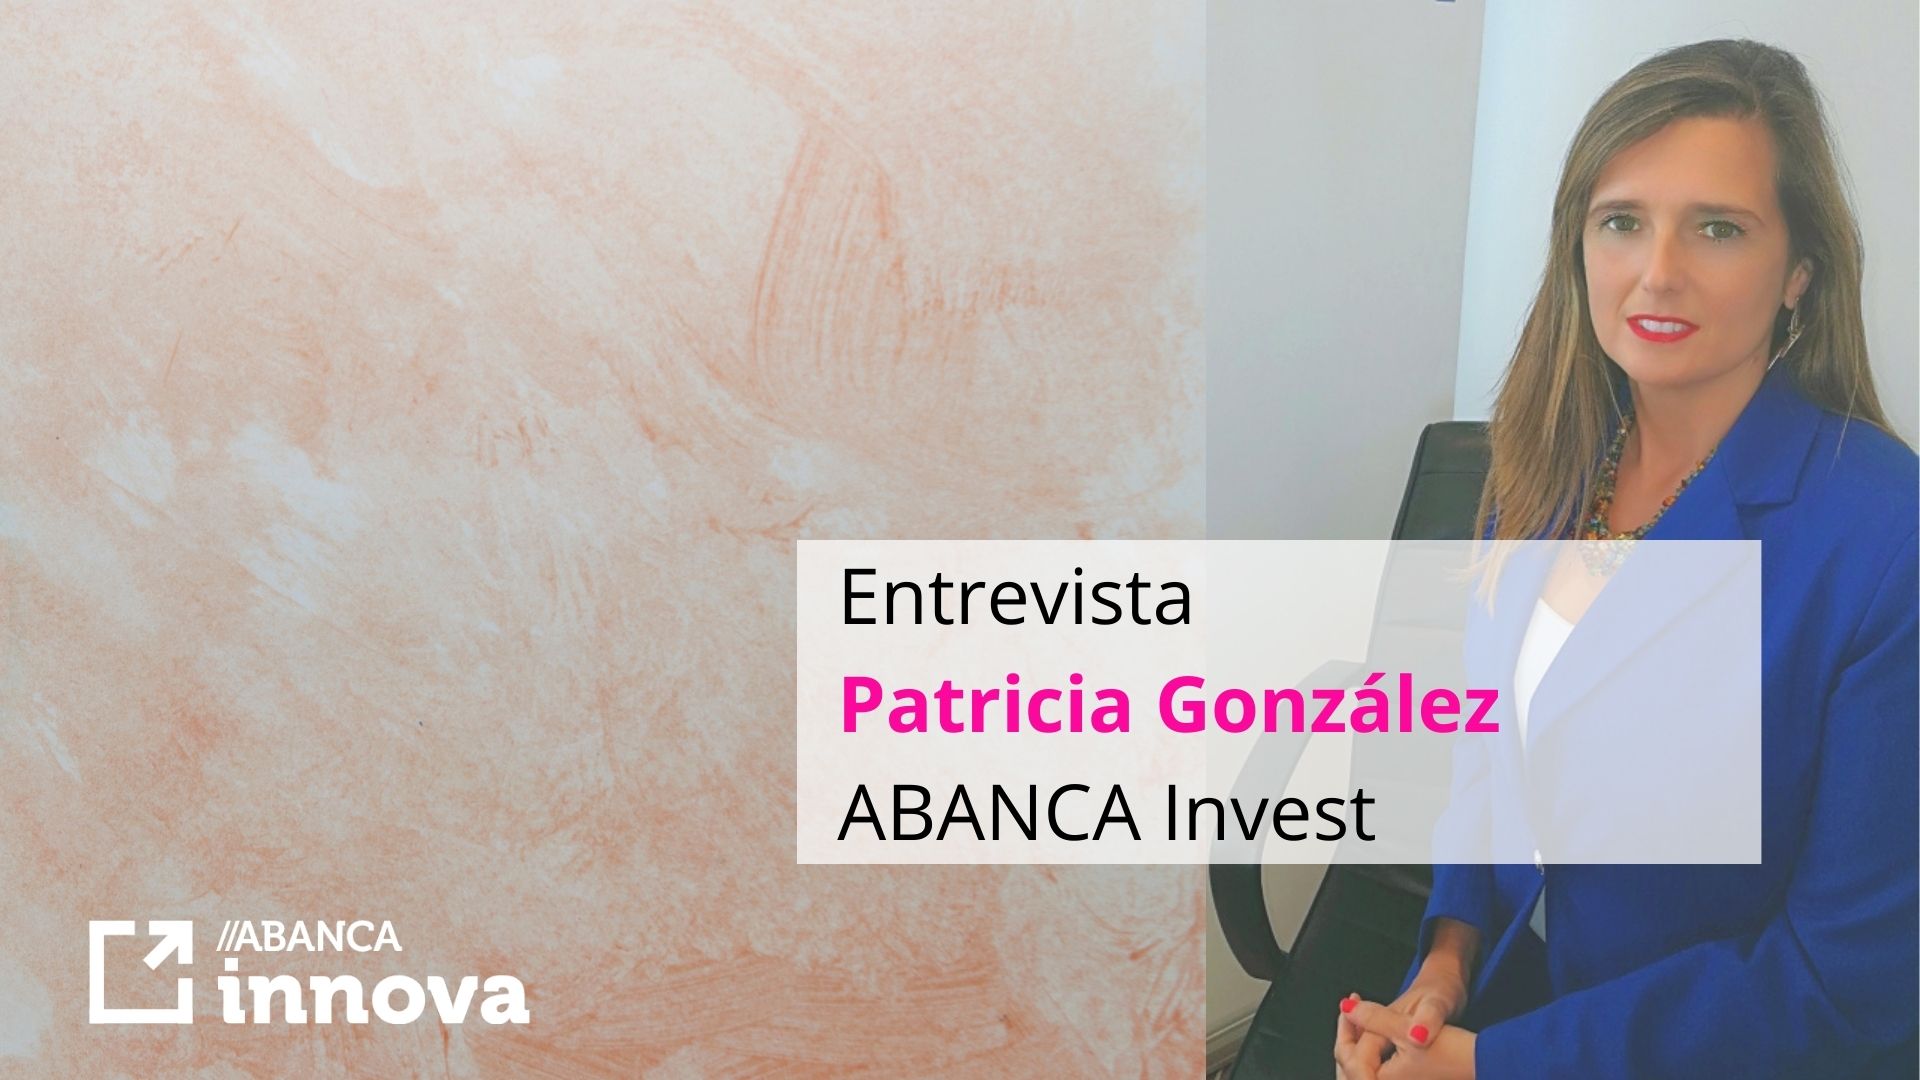 Entrevista a Patricia González de Investment Banking de ABANCA